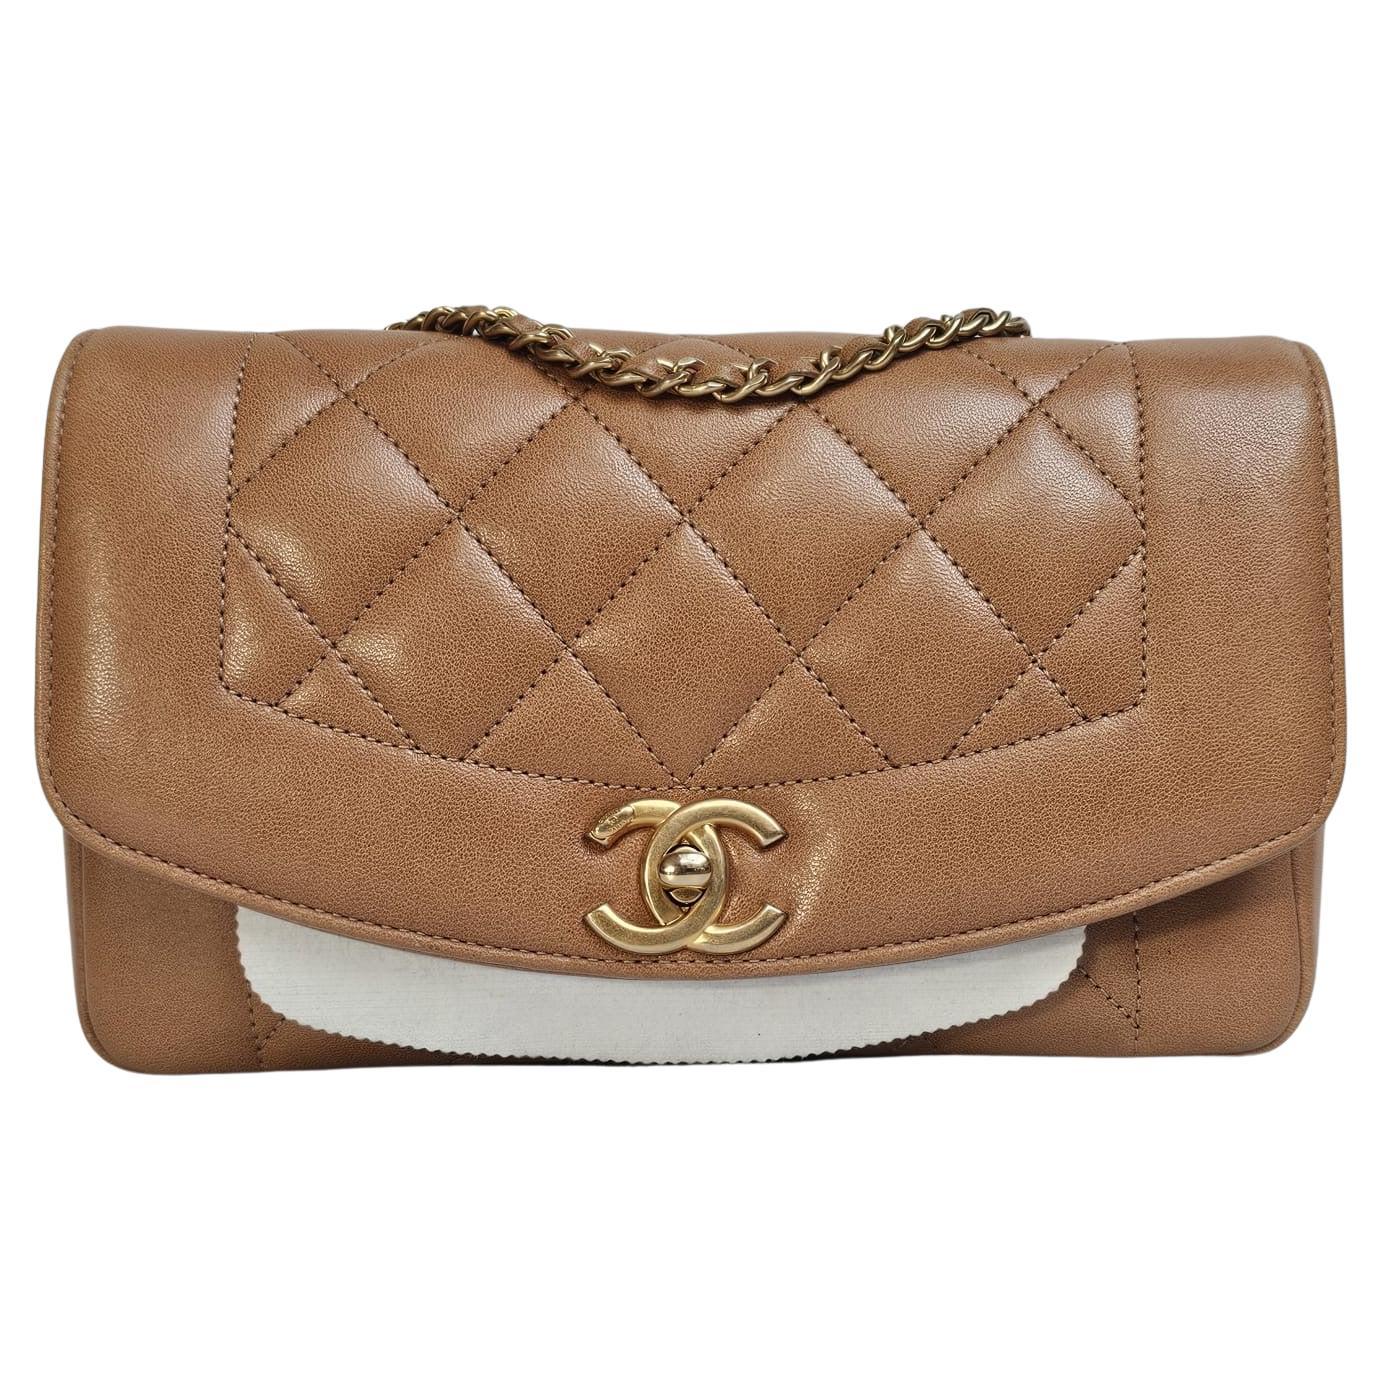 2014-2015 Chanel Caramel Diana Flap Bag For Sale